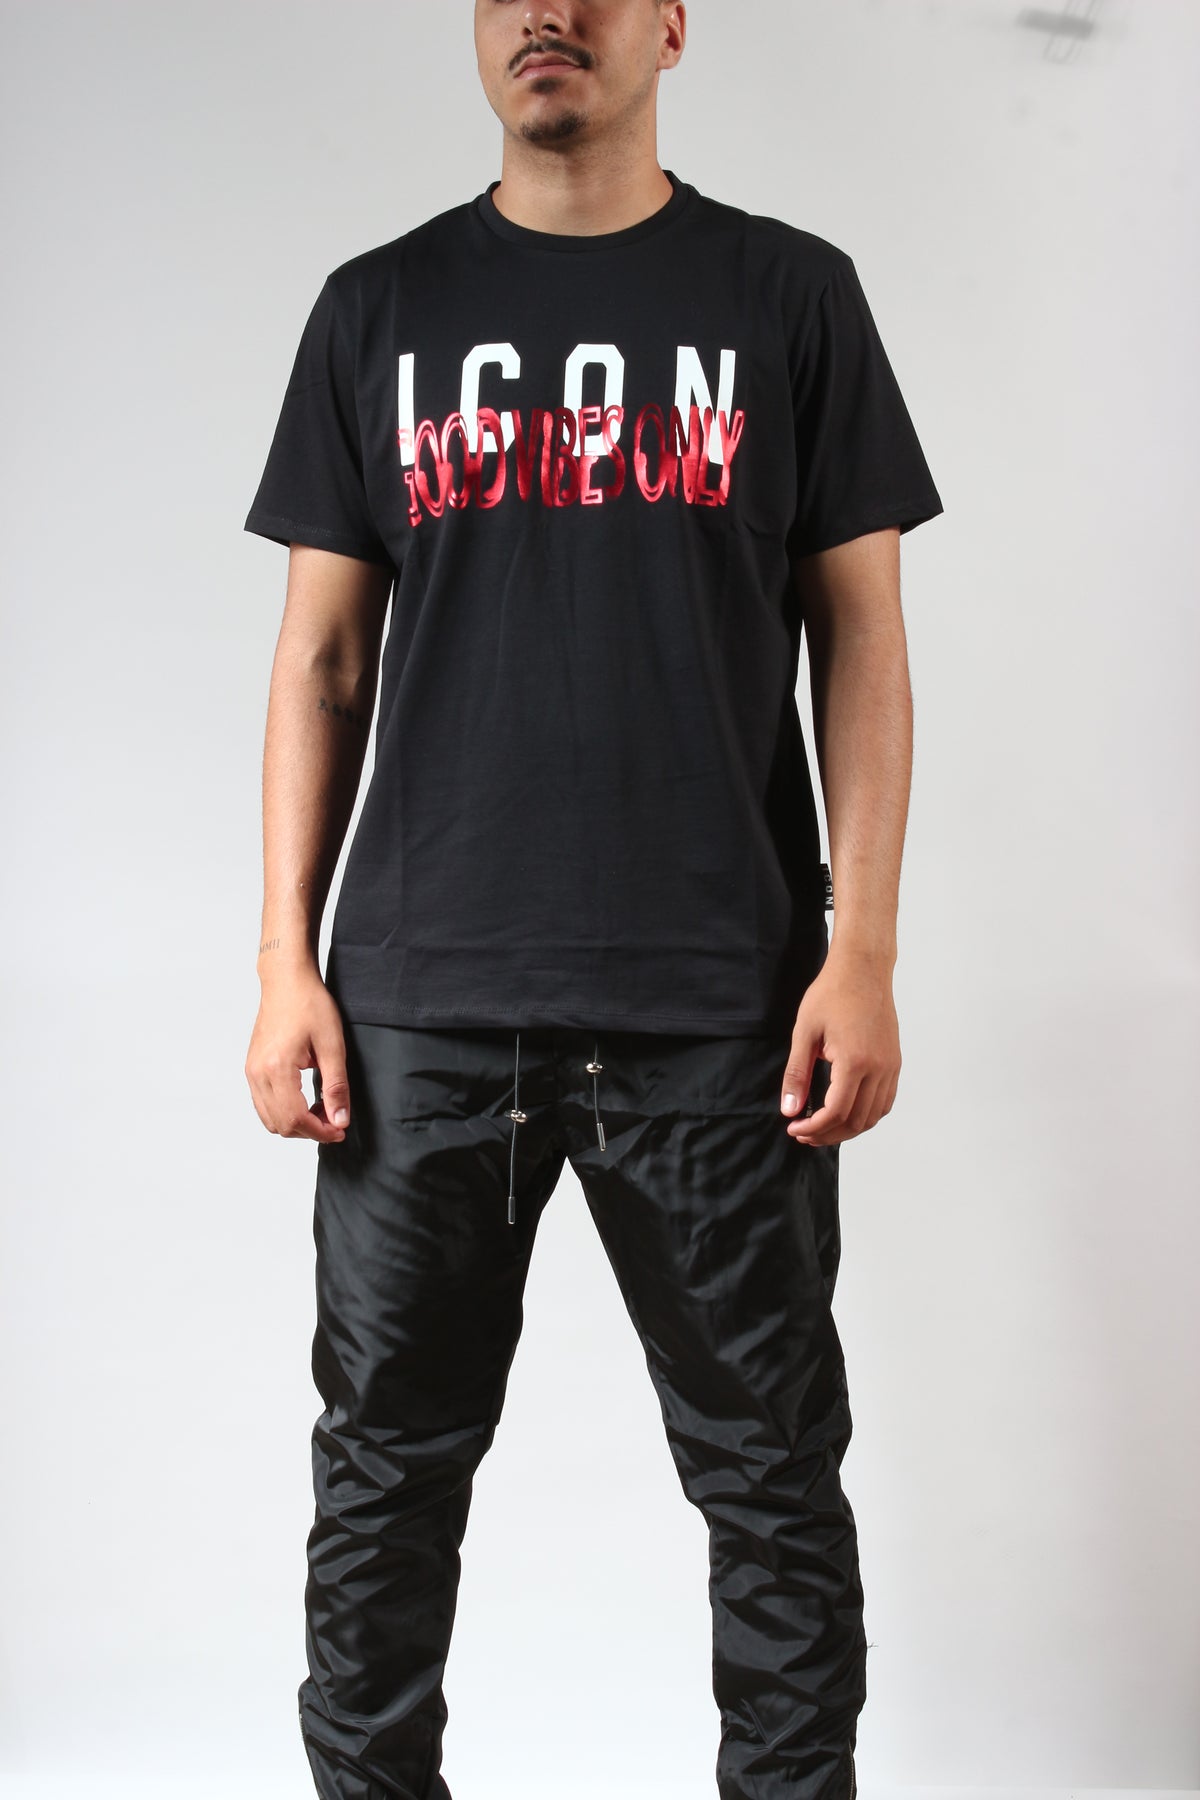 ICON T-Shirt